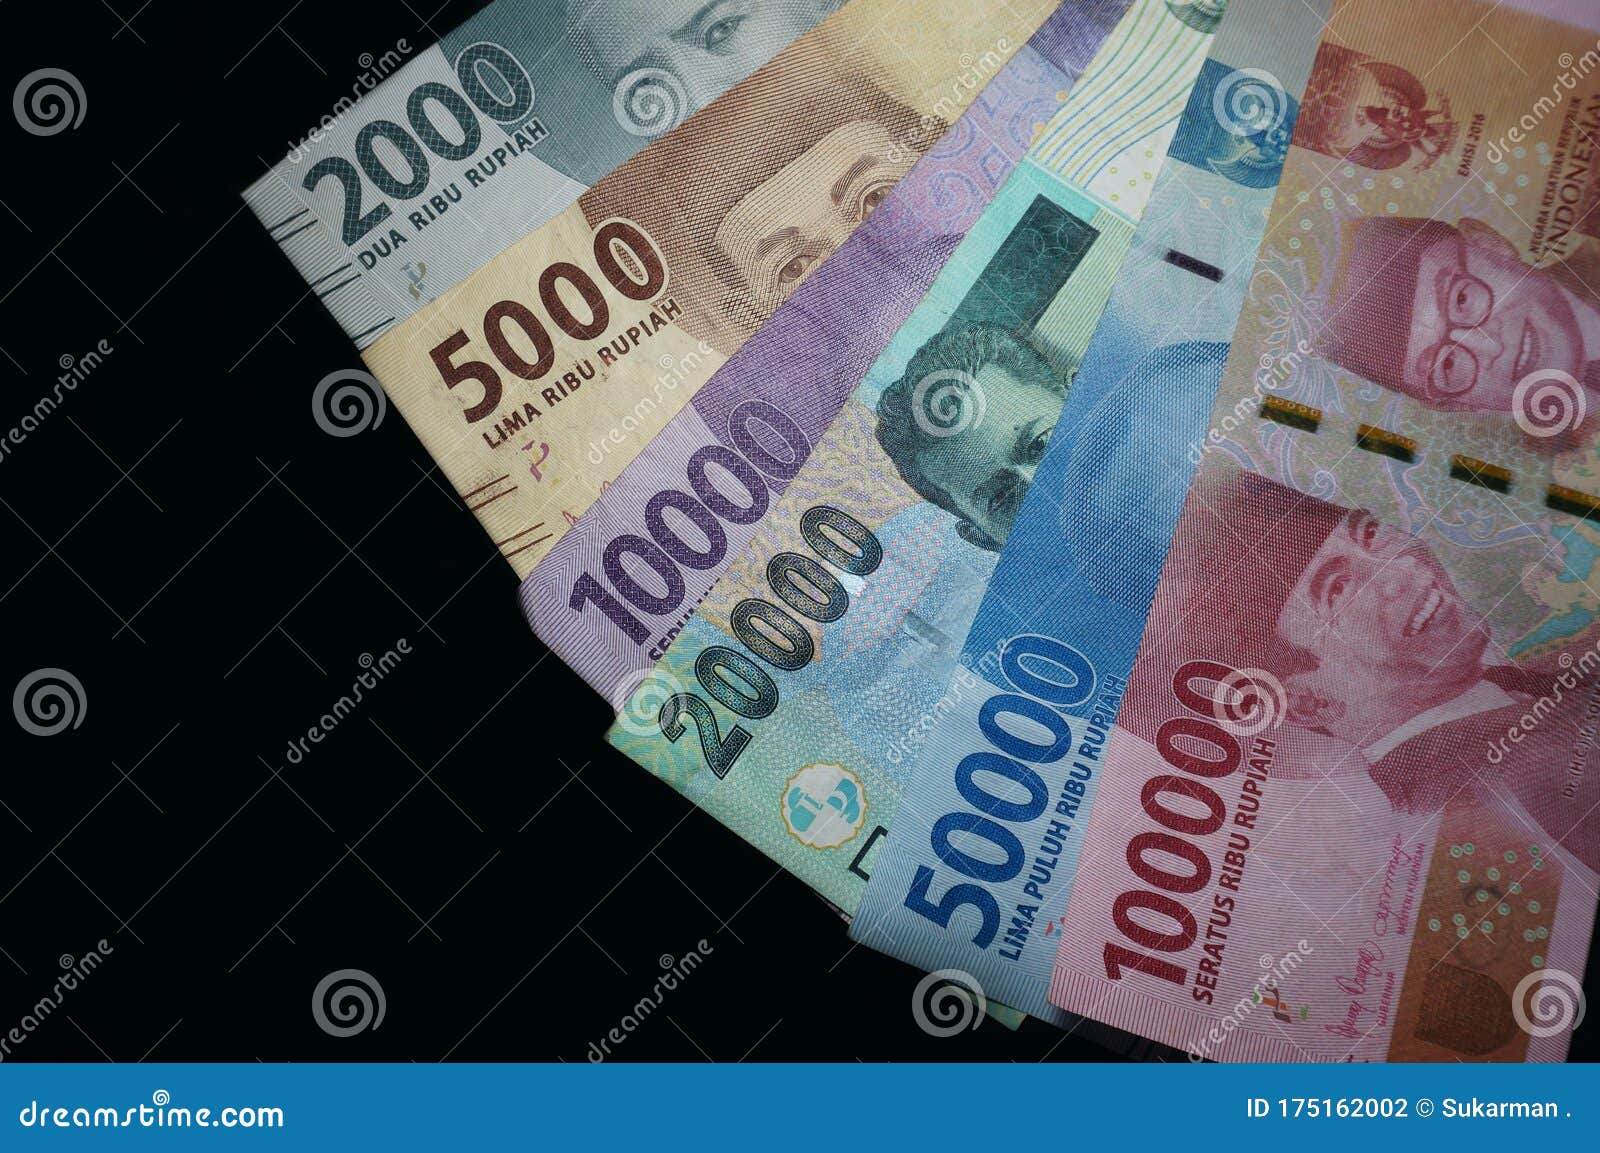 money indonesian rupiah banknotes